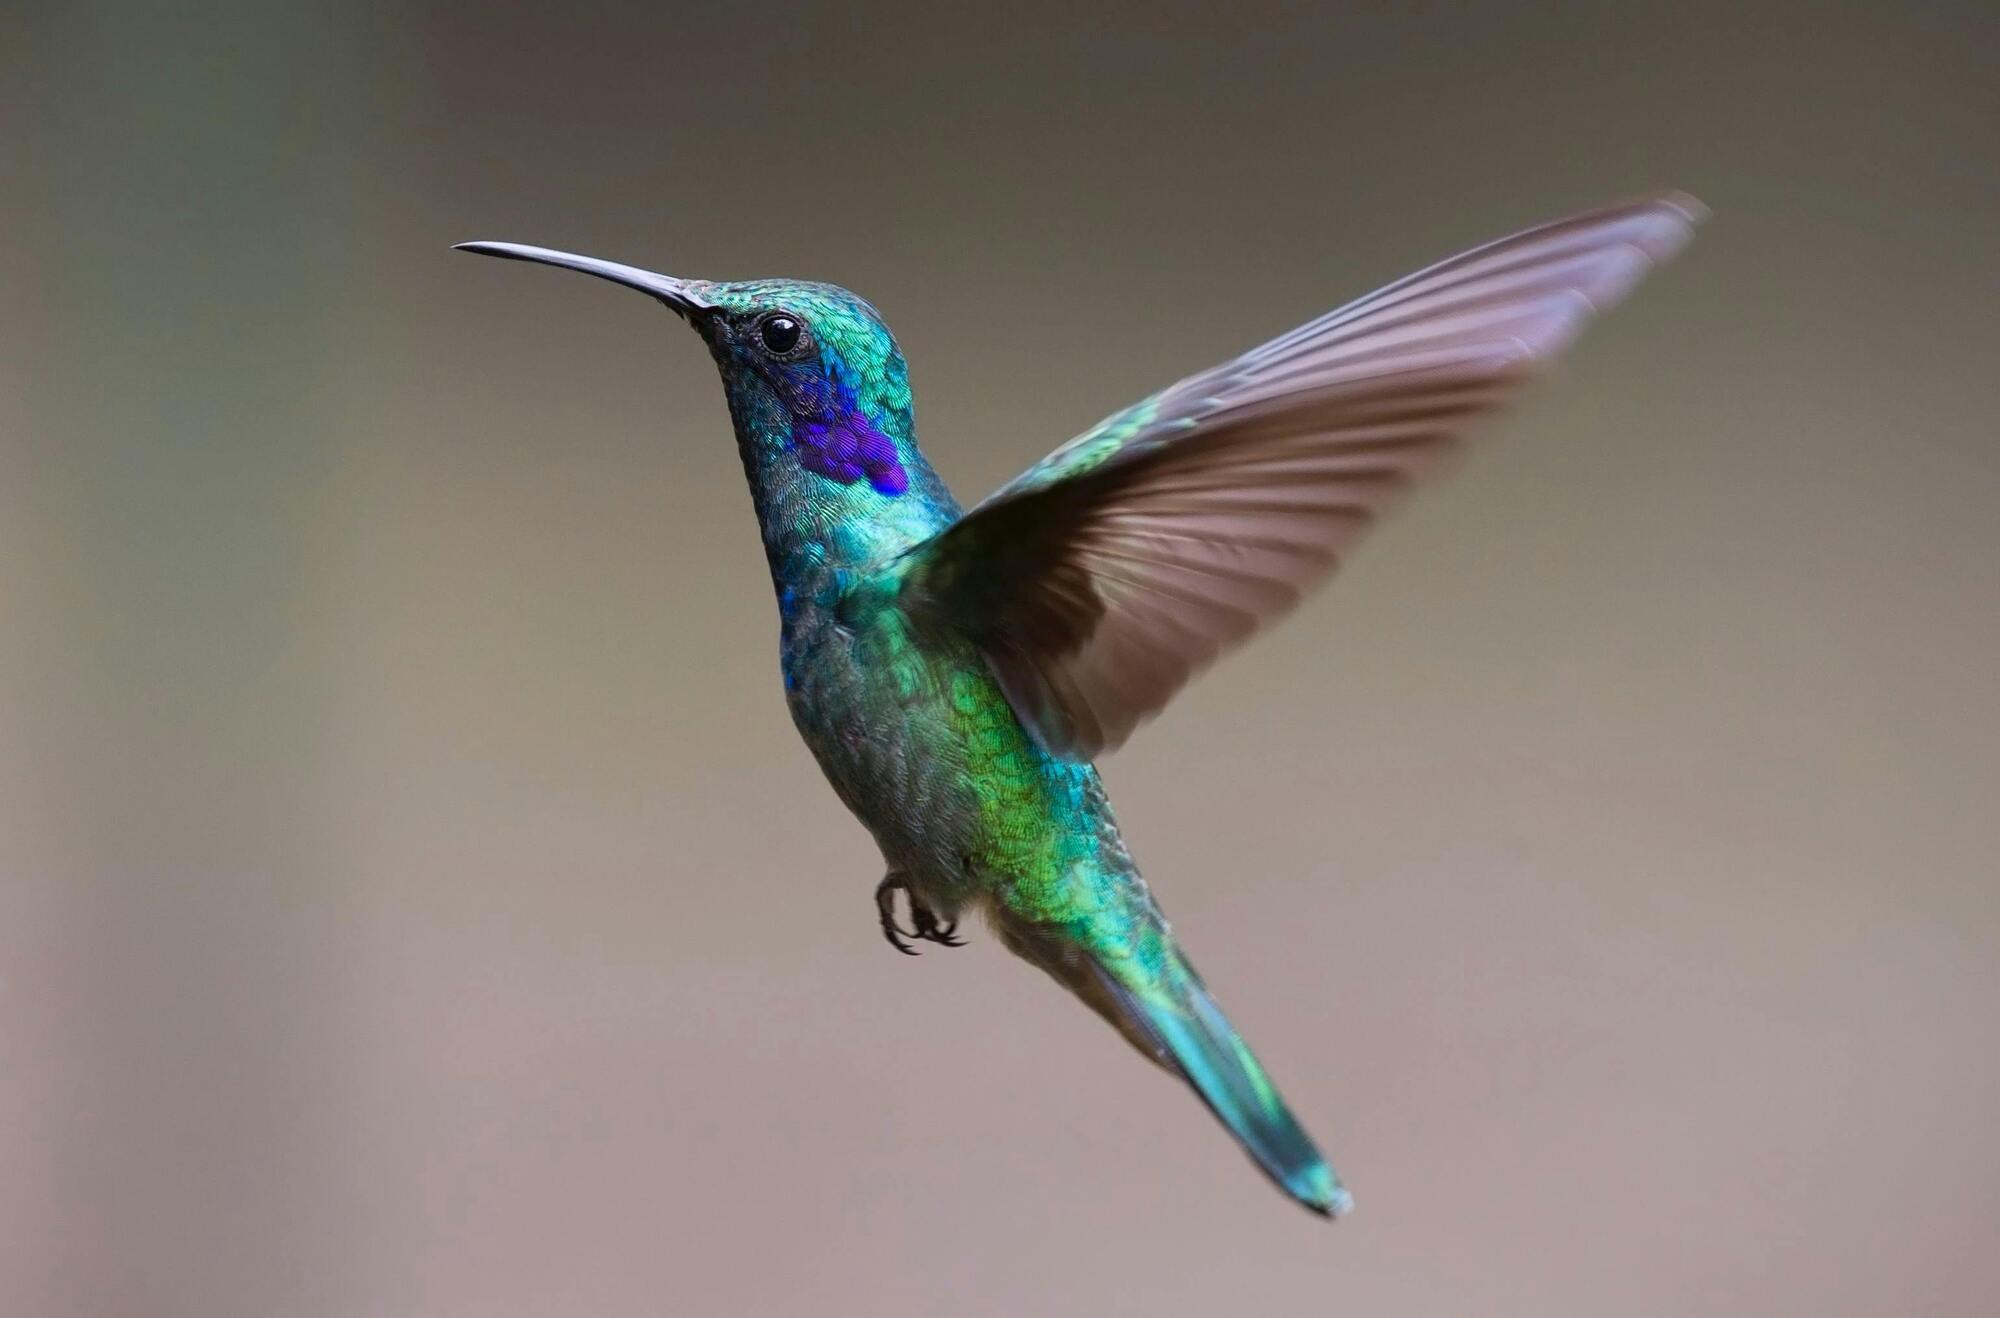 The hummingbird is the spirit animal of Virgo